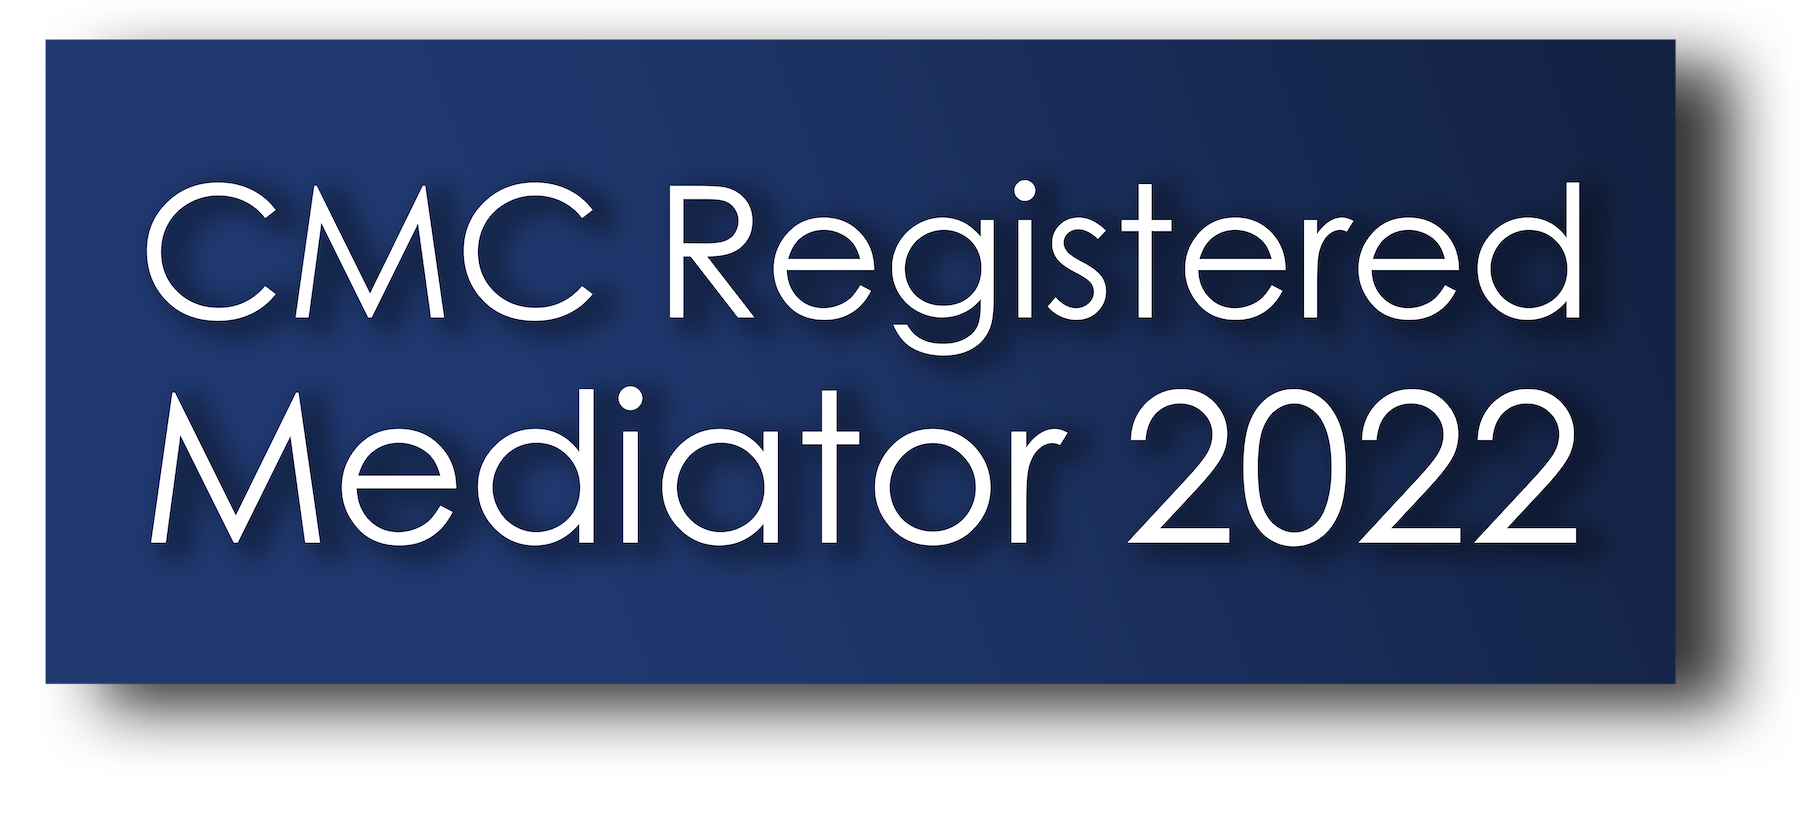 Link to proof of CMC mediation registration